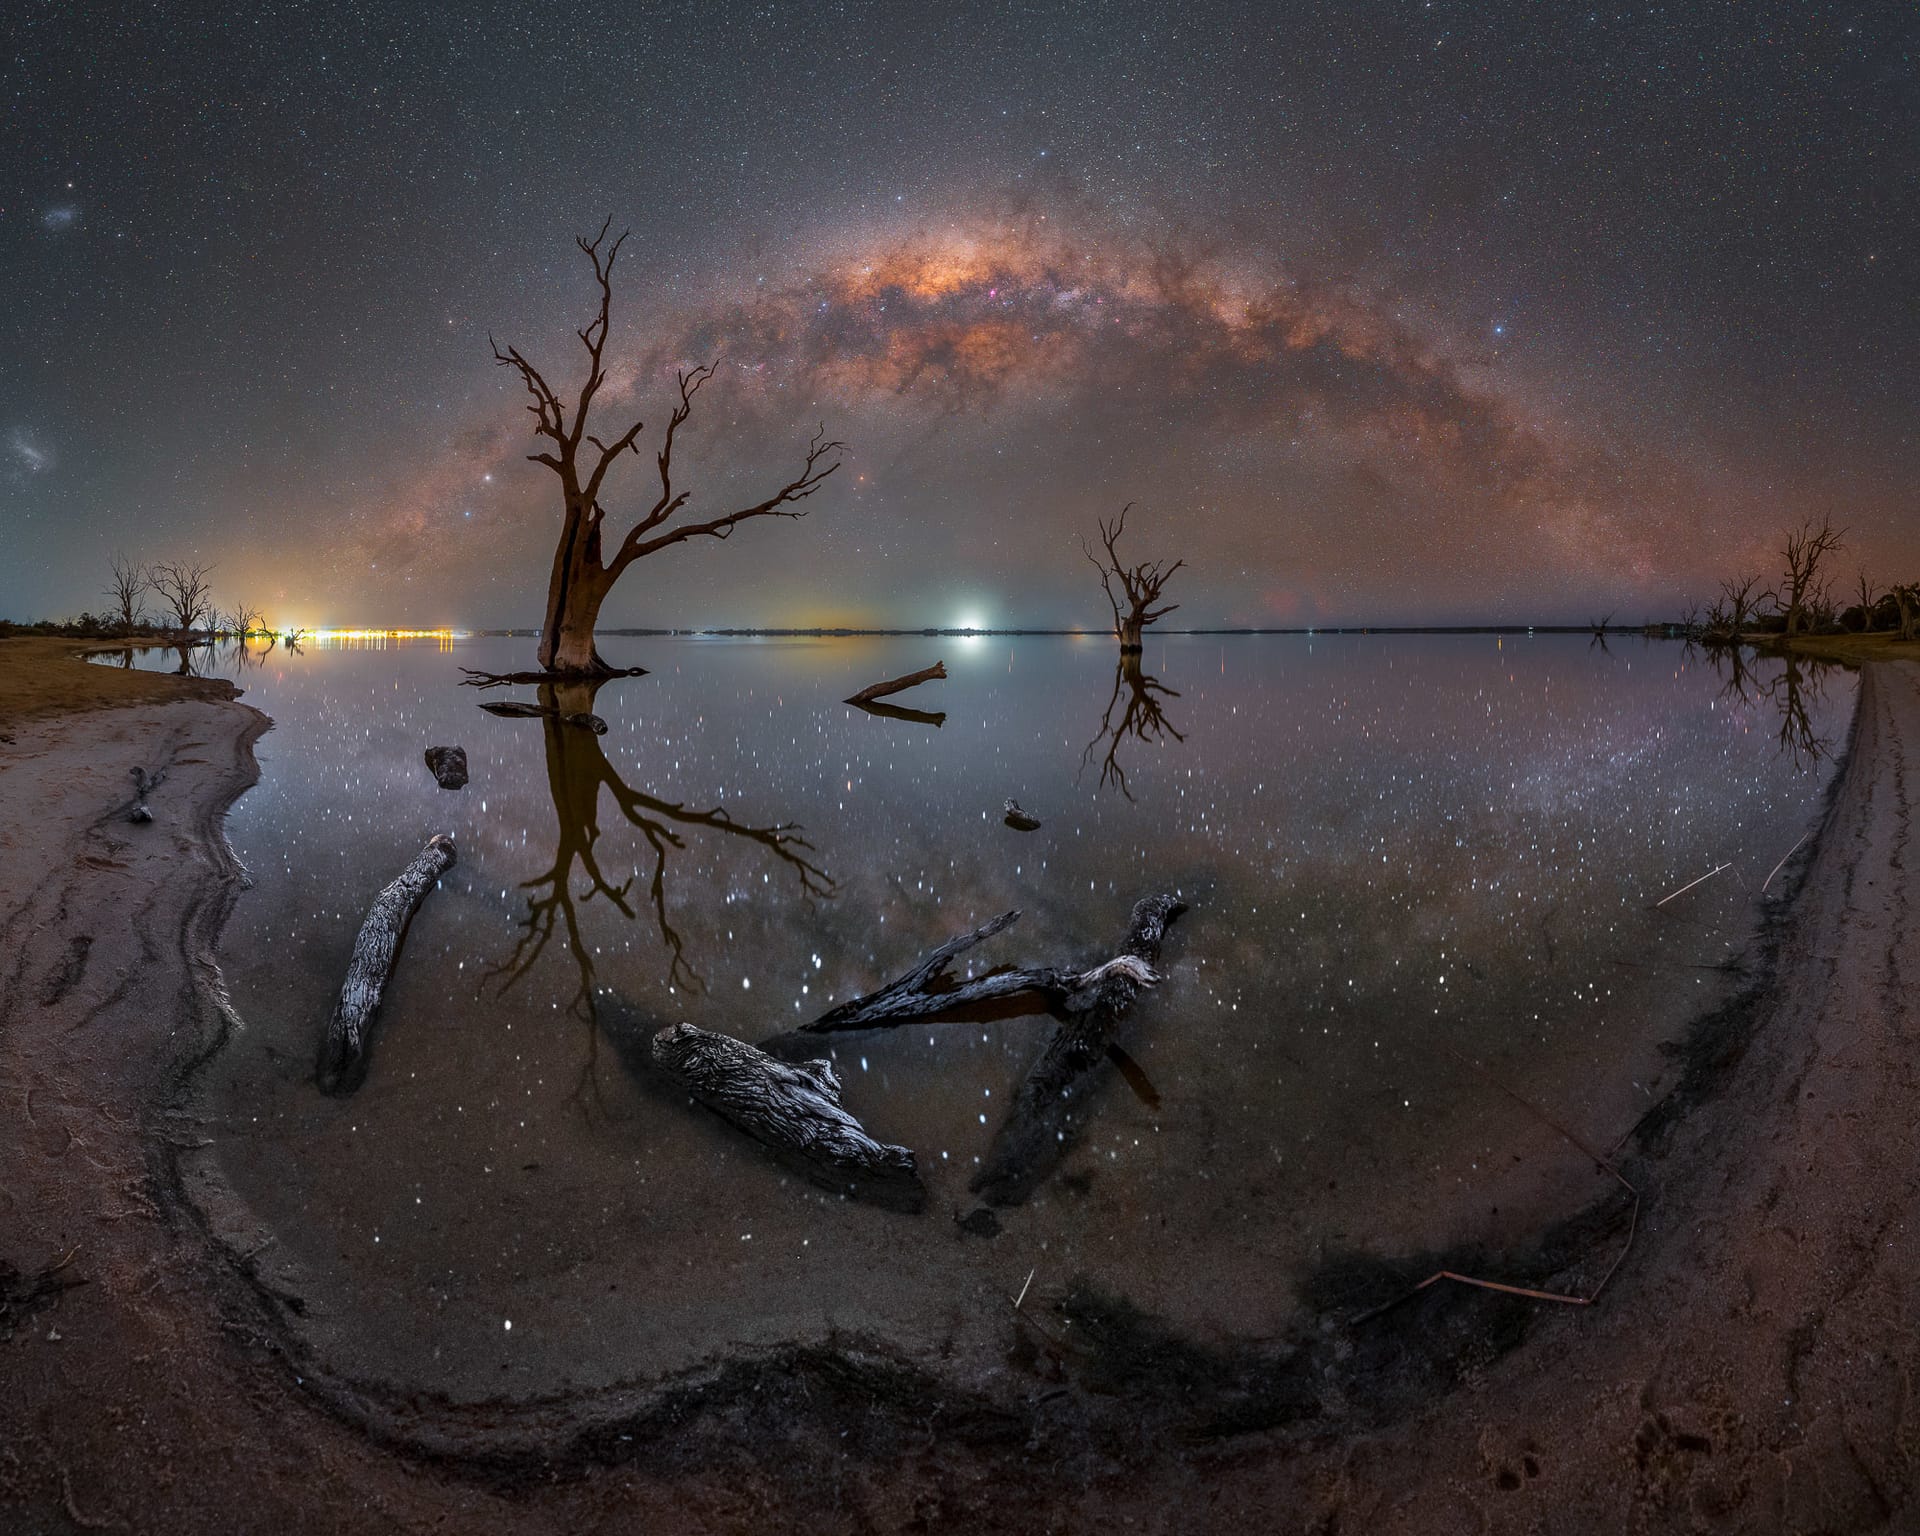 Milky Way photographer of the year Sur de Australia